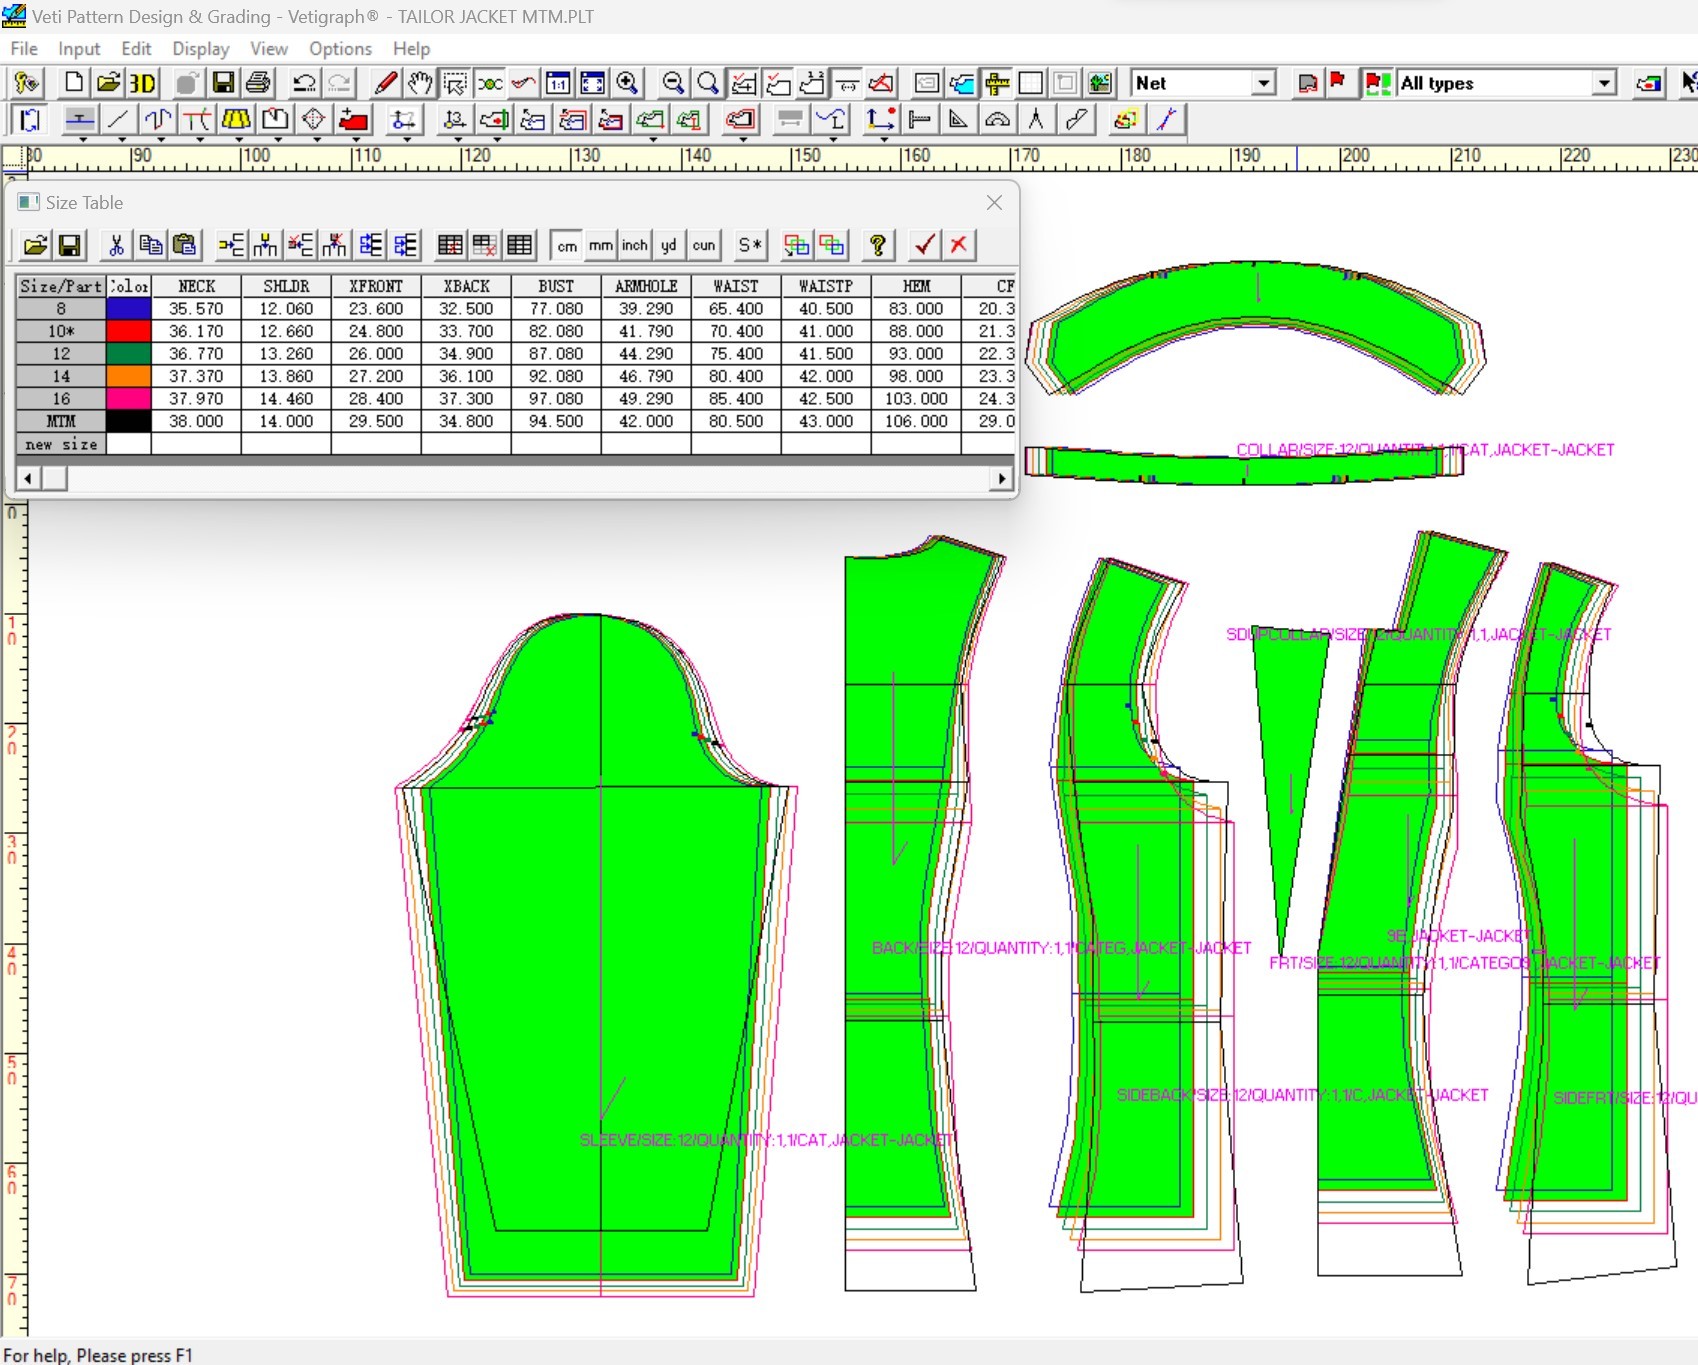 Made to measure CAD design image